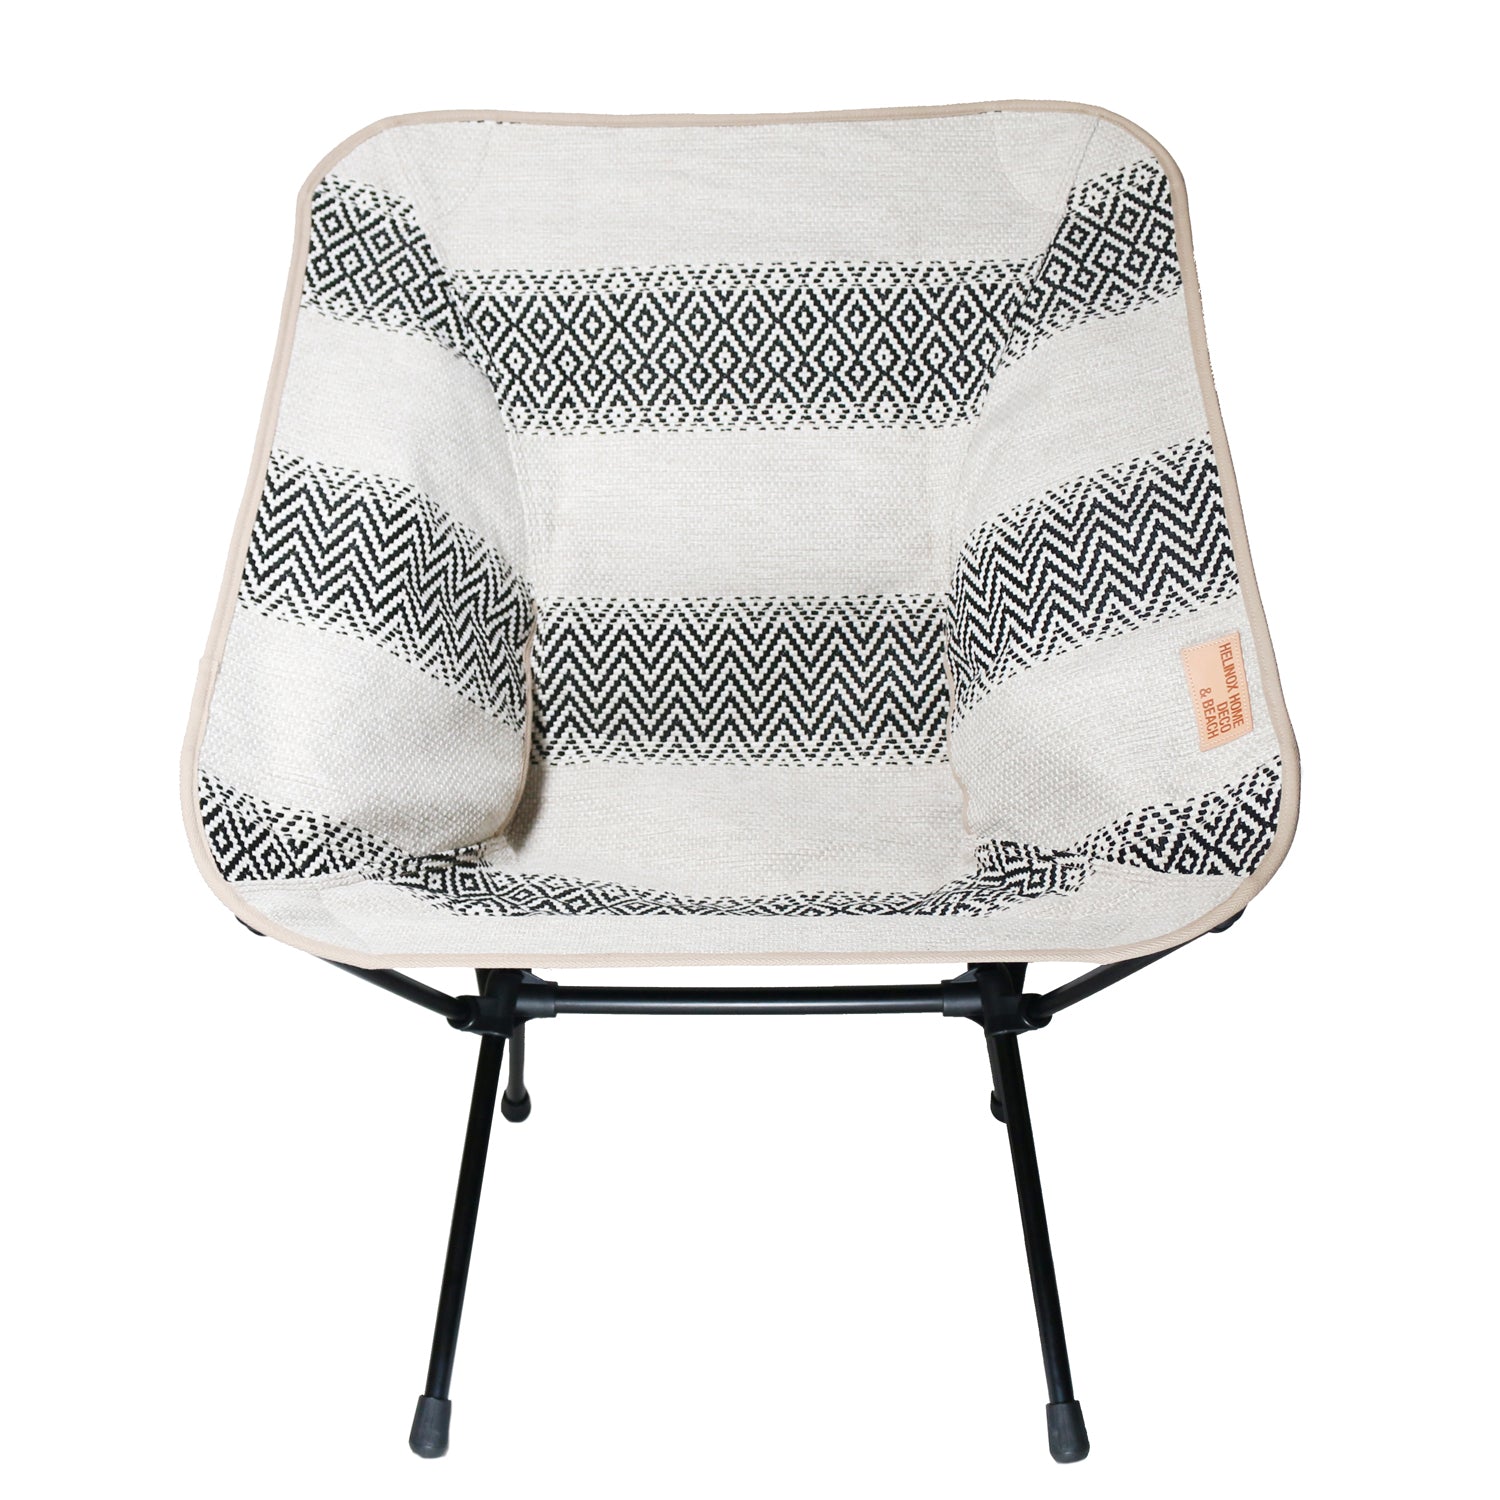 CUB0113 Helinox comfort chair XL | THE SUPERIOR LABOR / T.S.L CUB